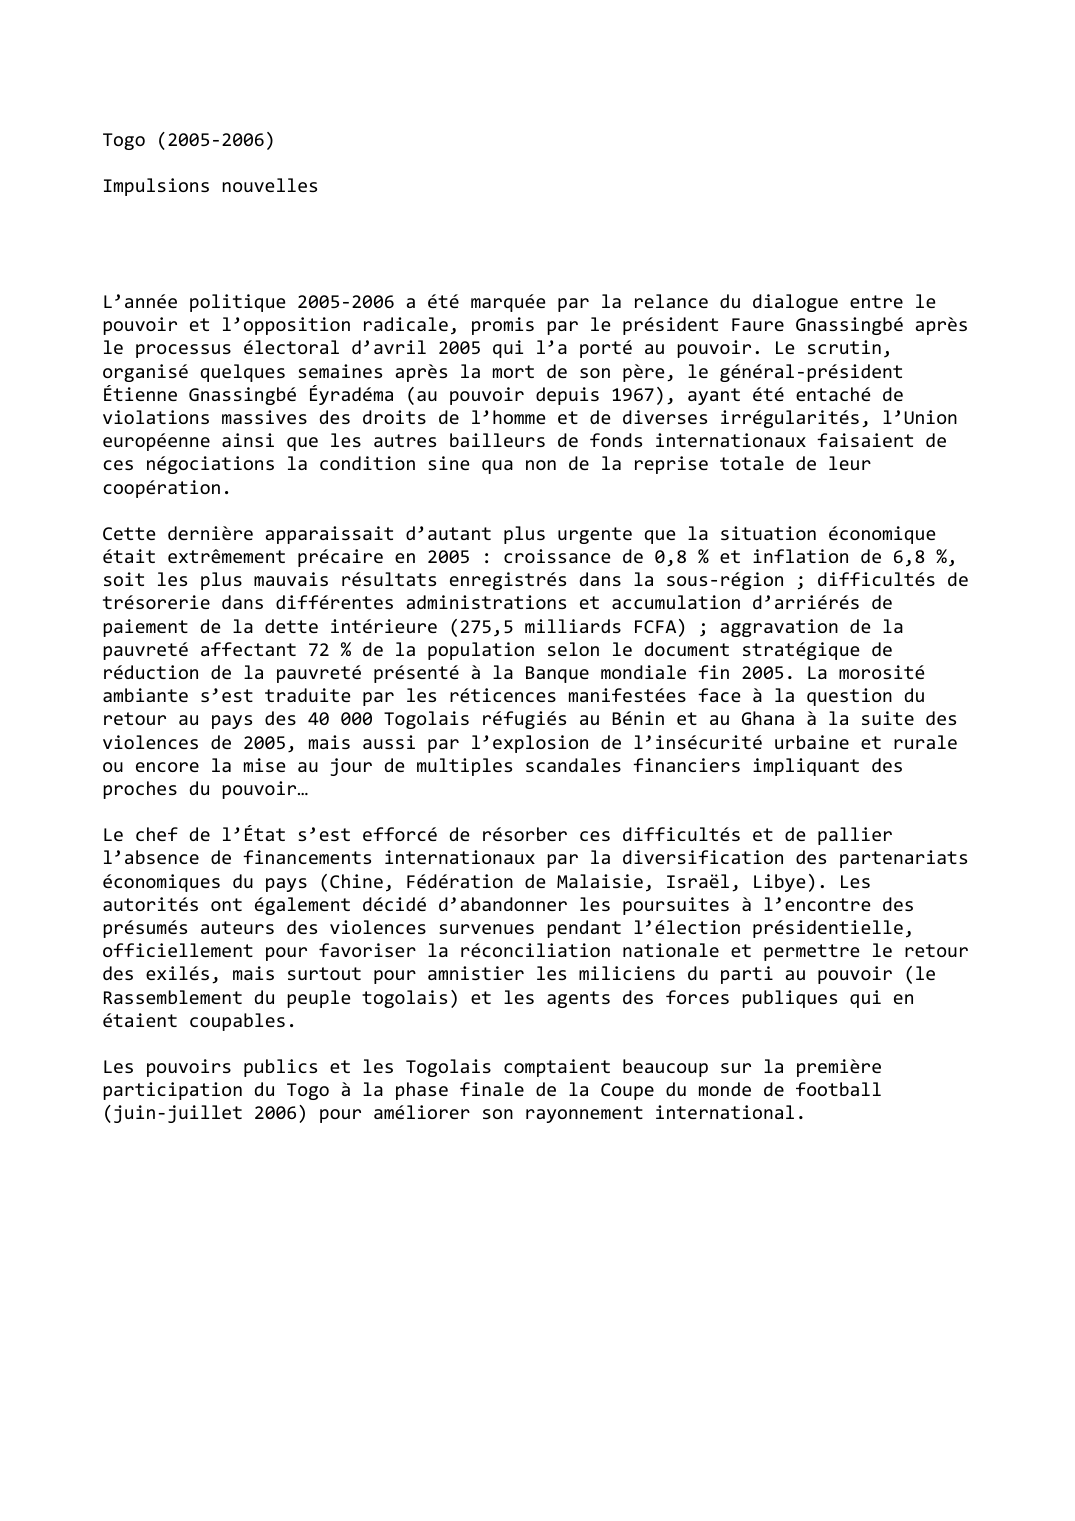 Prévisualisation du document Togo (2005-2006)